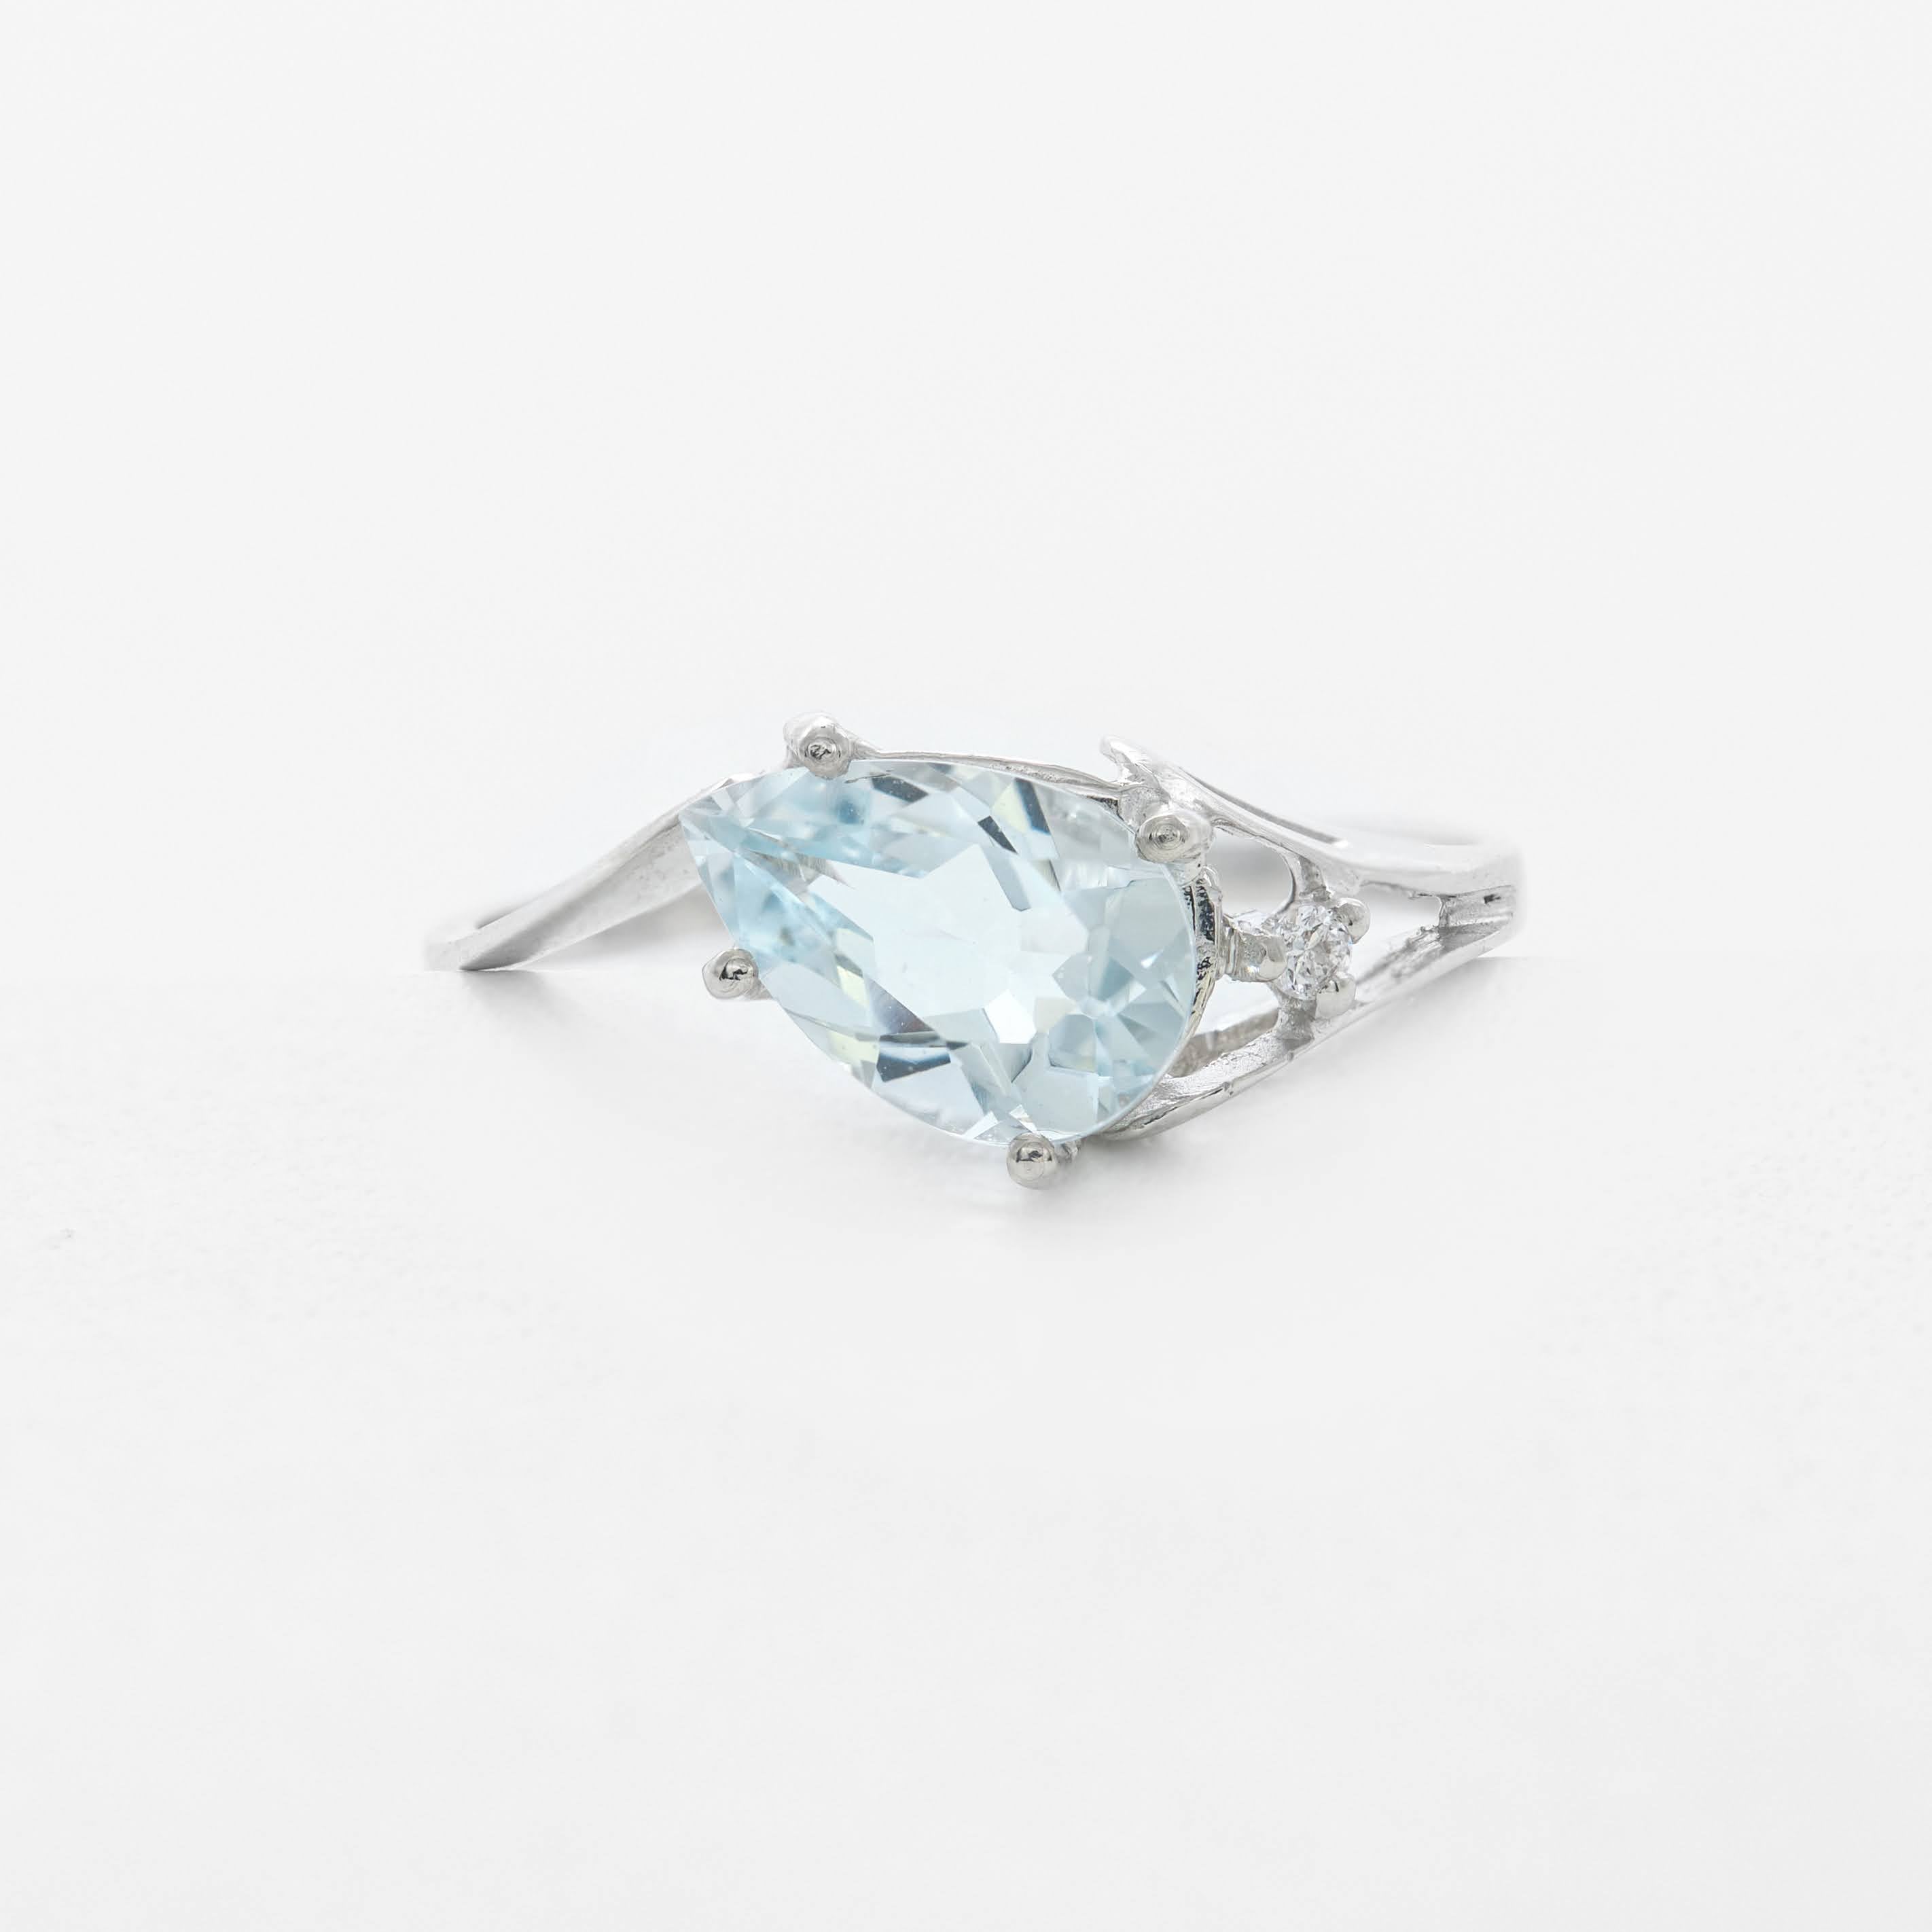 Lewis ring with aquamarine and diamonds